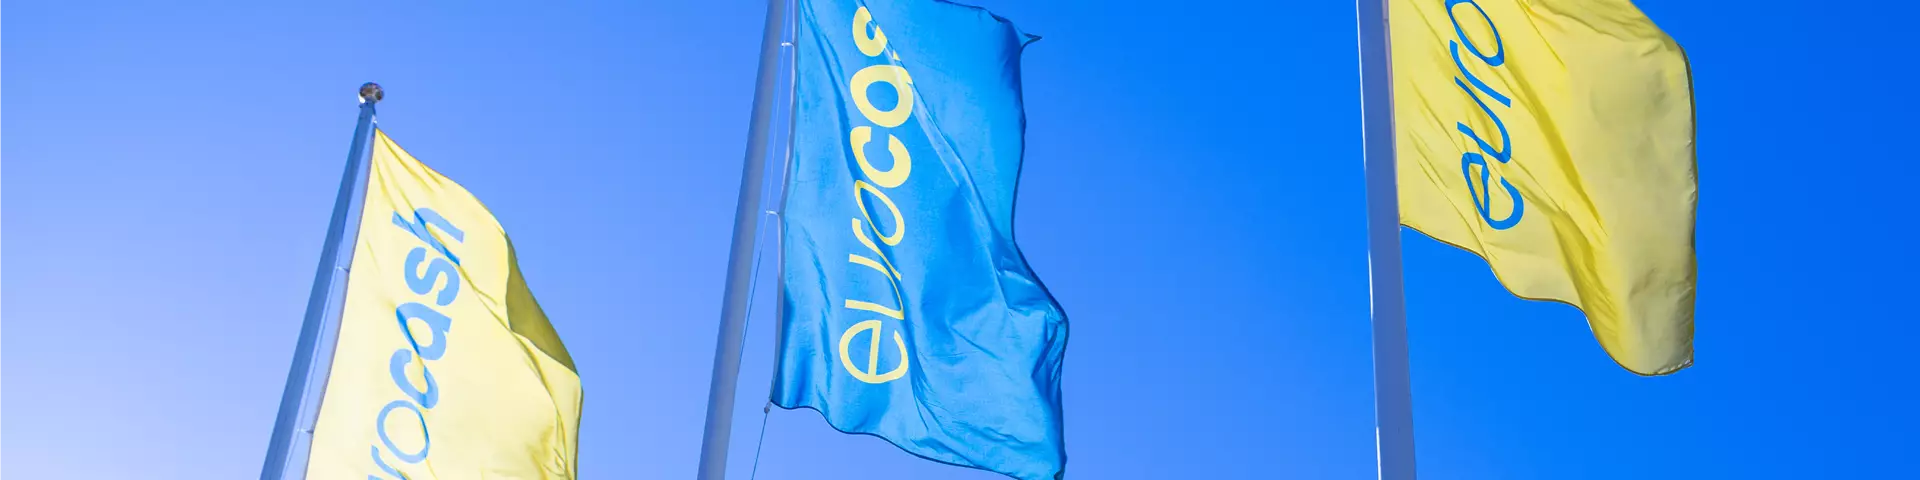 Eurocash-flaggor som vajar i vinden mot blå himmel.